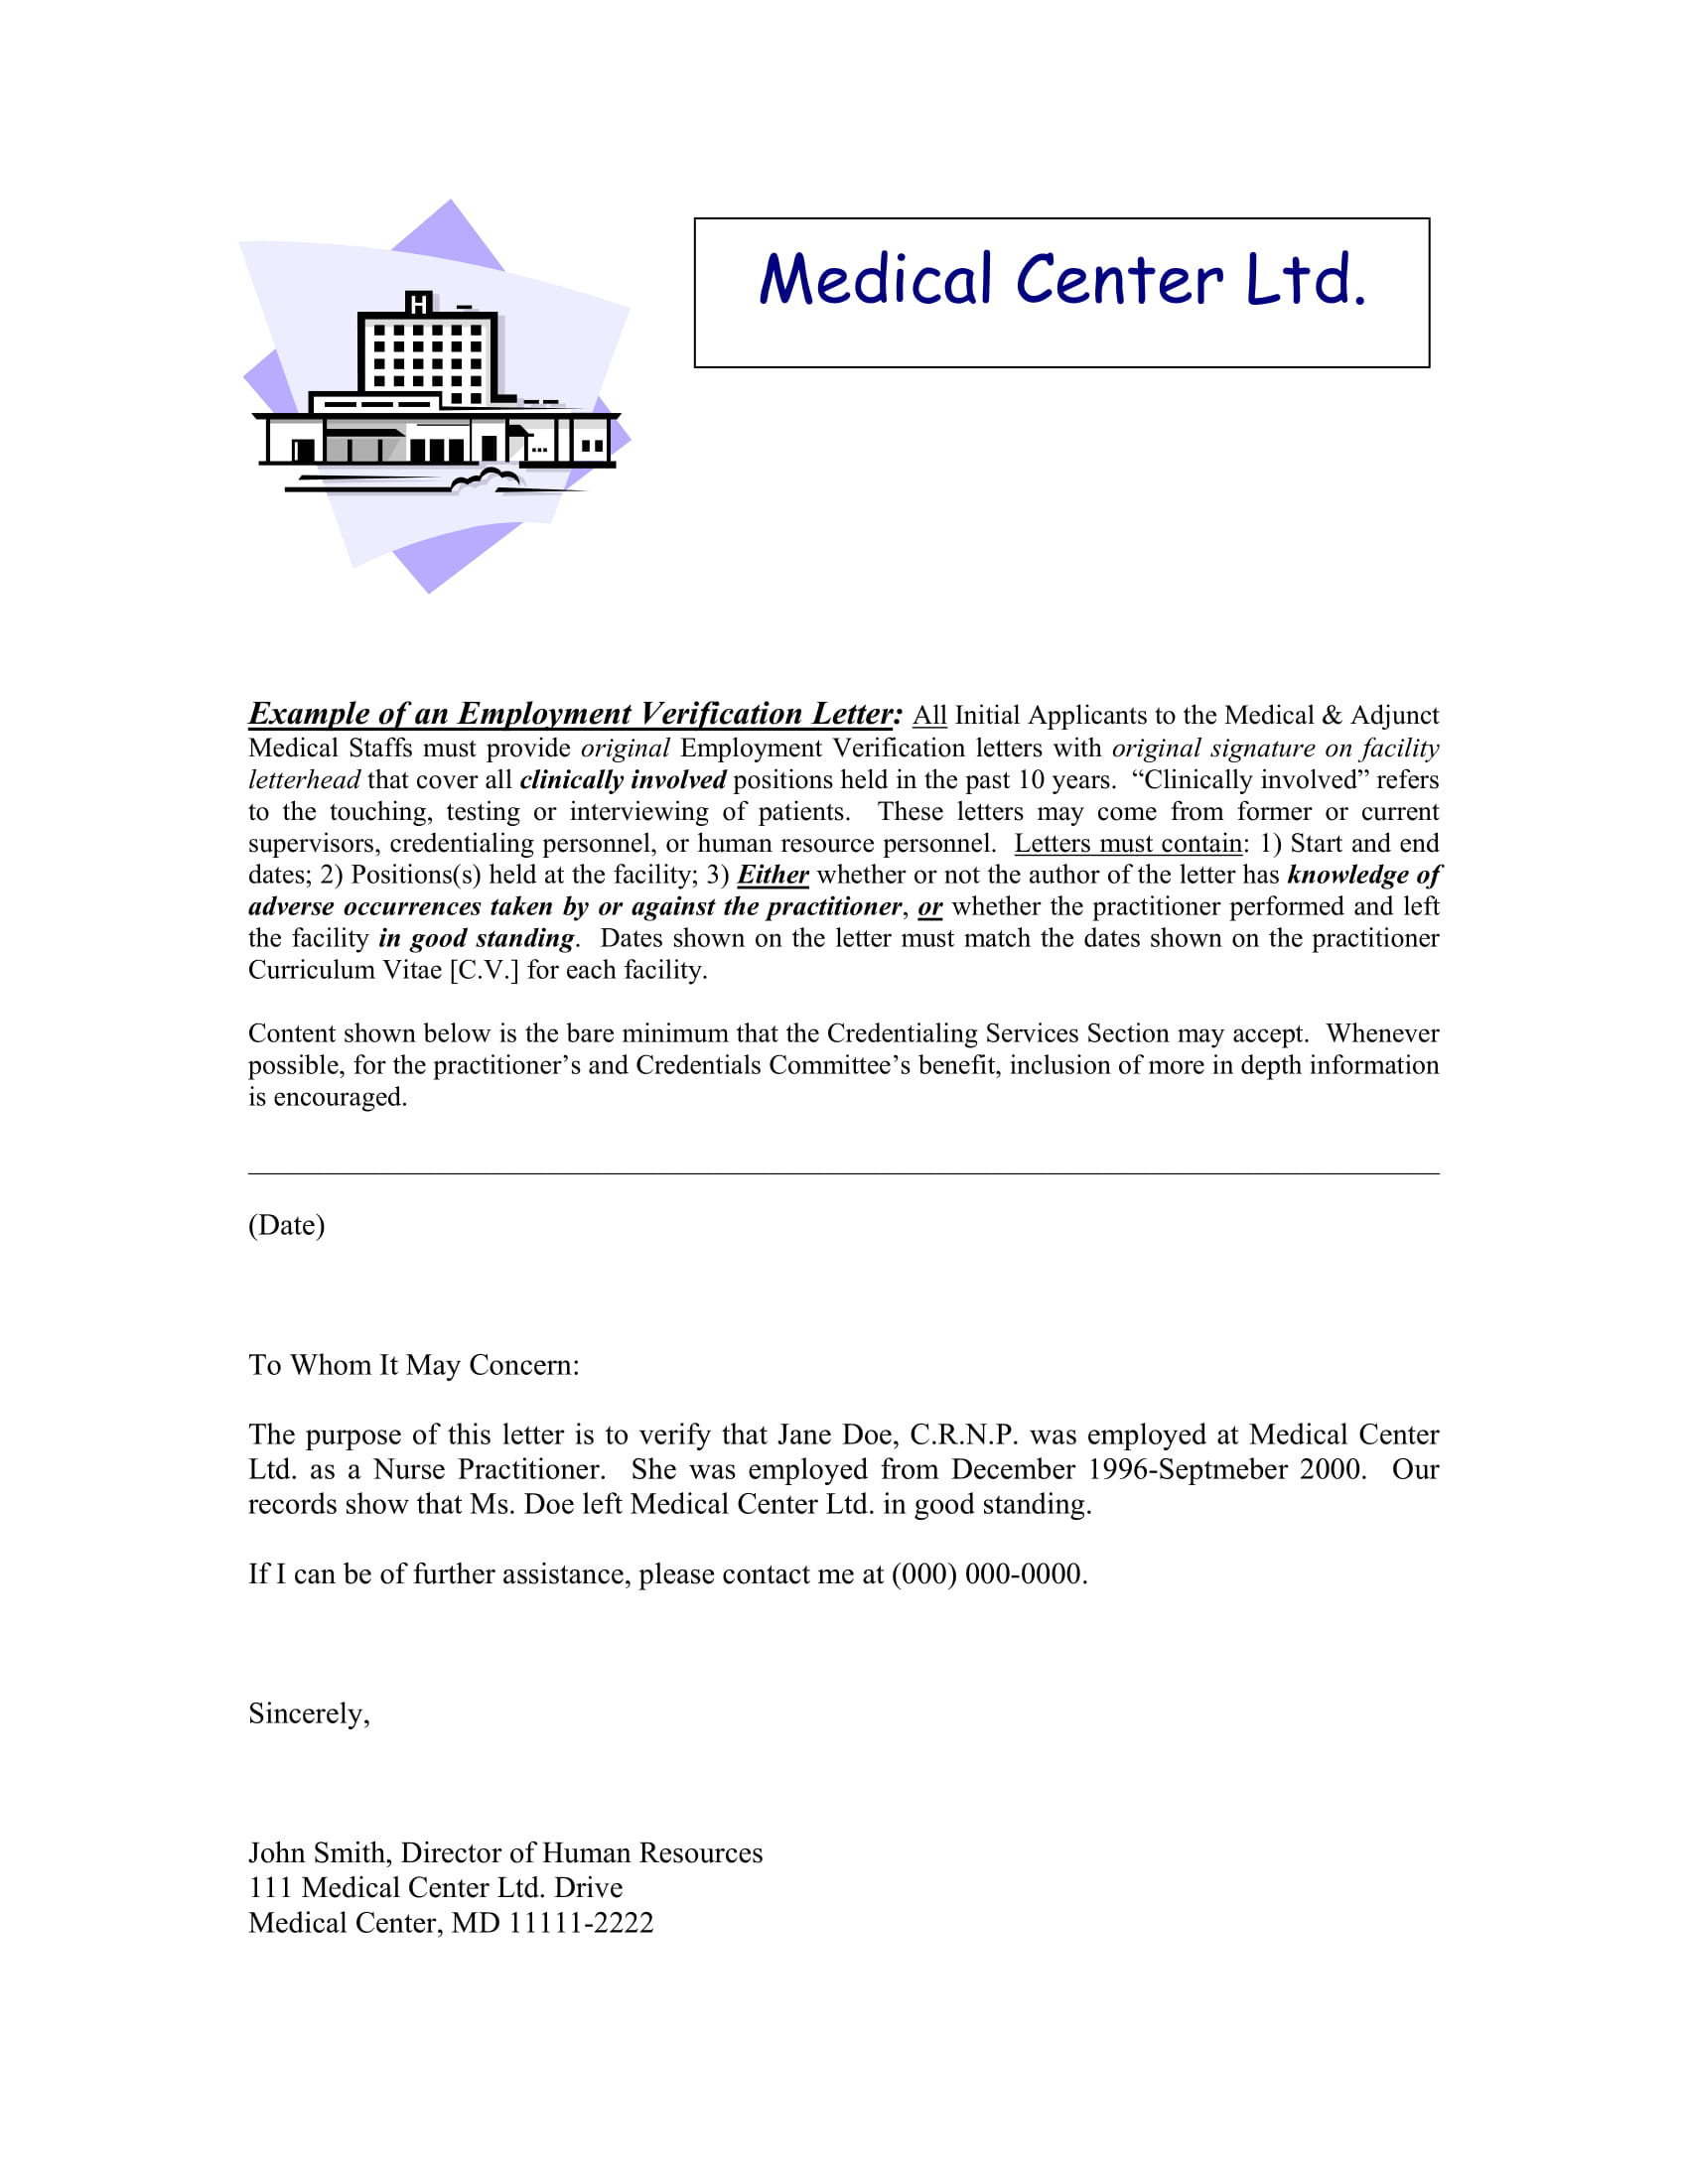 medical center employment verification letter example